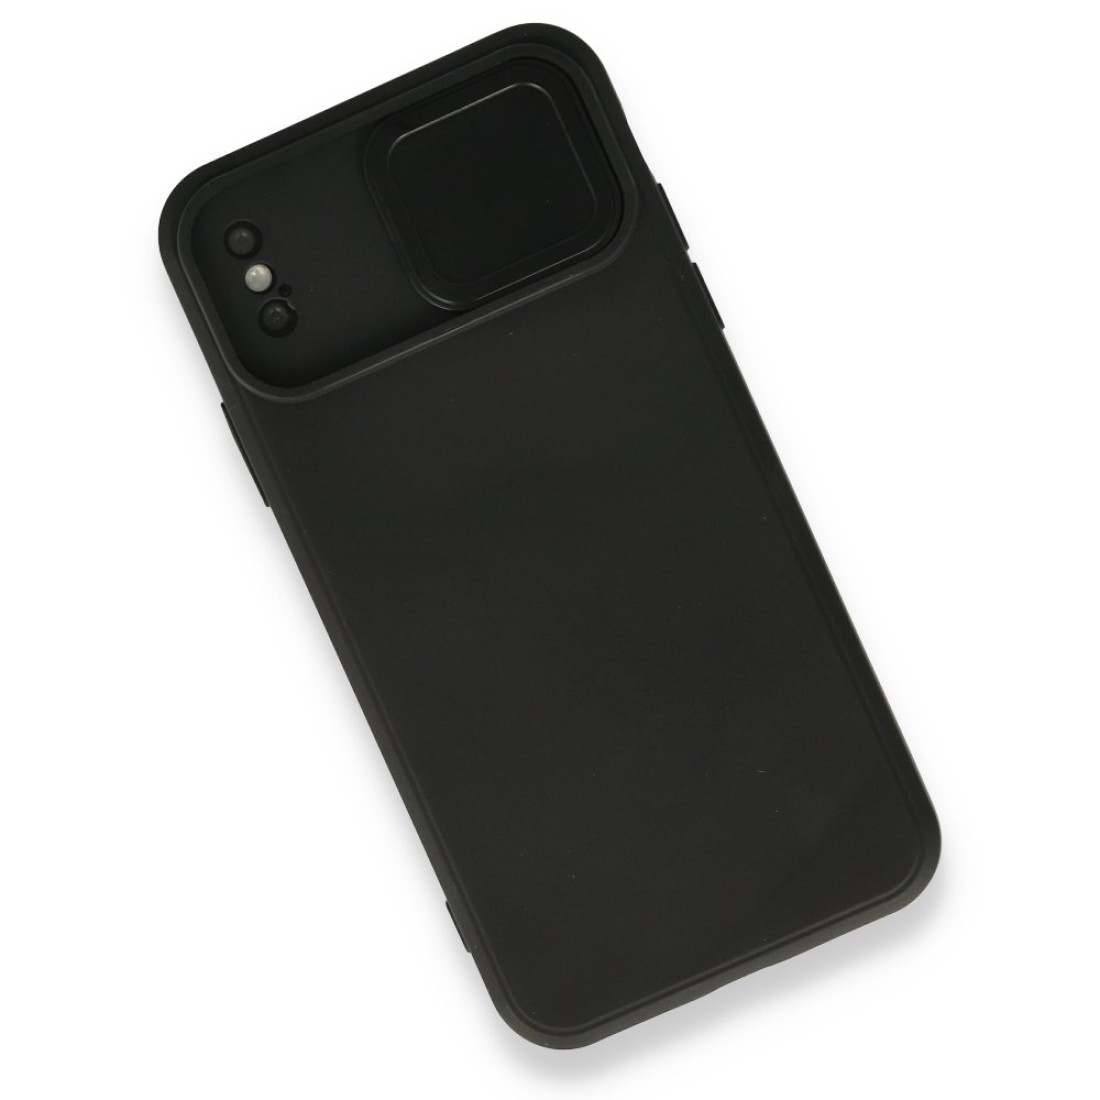 Apple iPhone X Kılıf Color Lens Silikon - Siyah